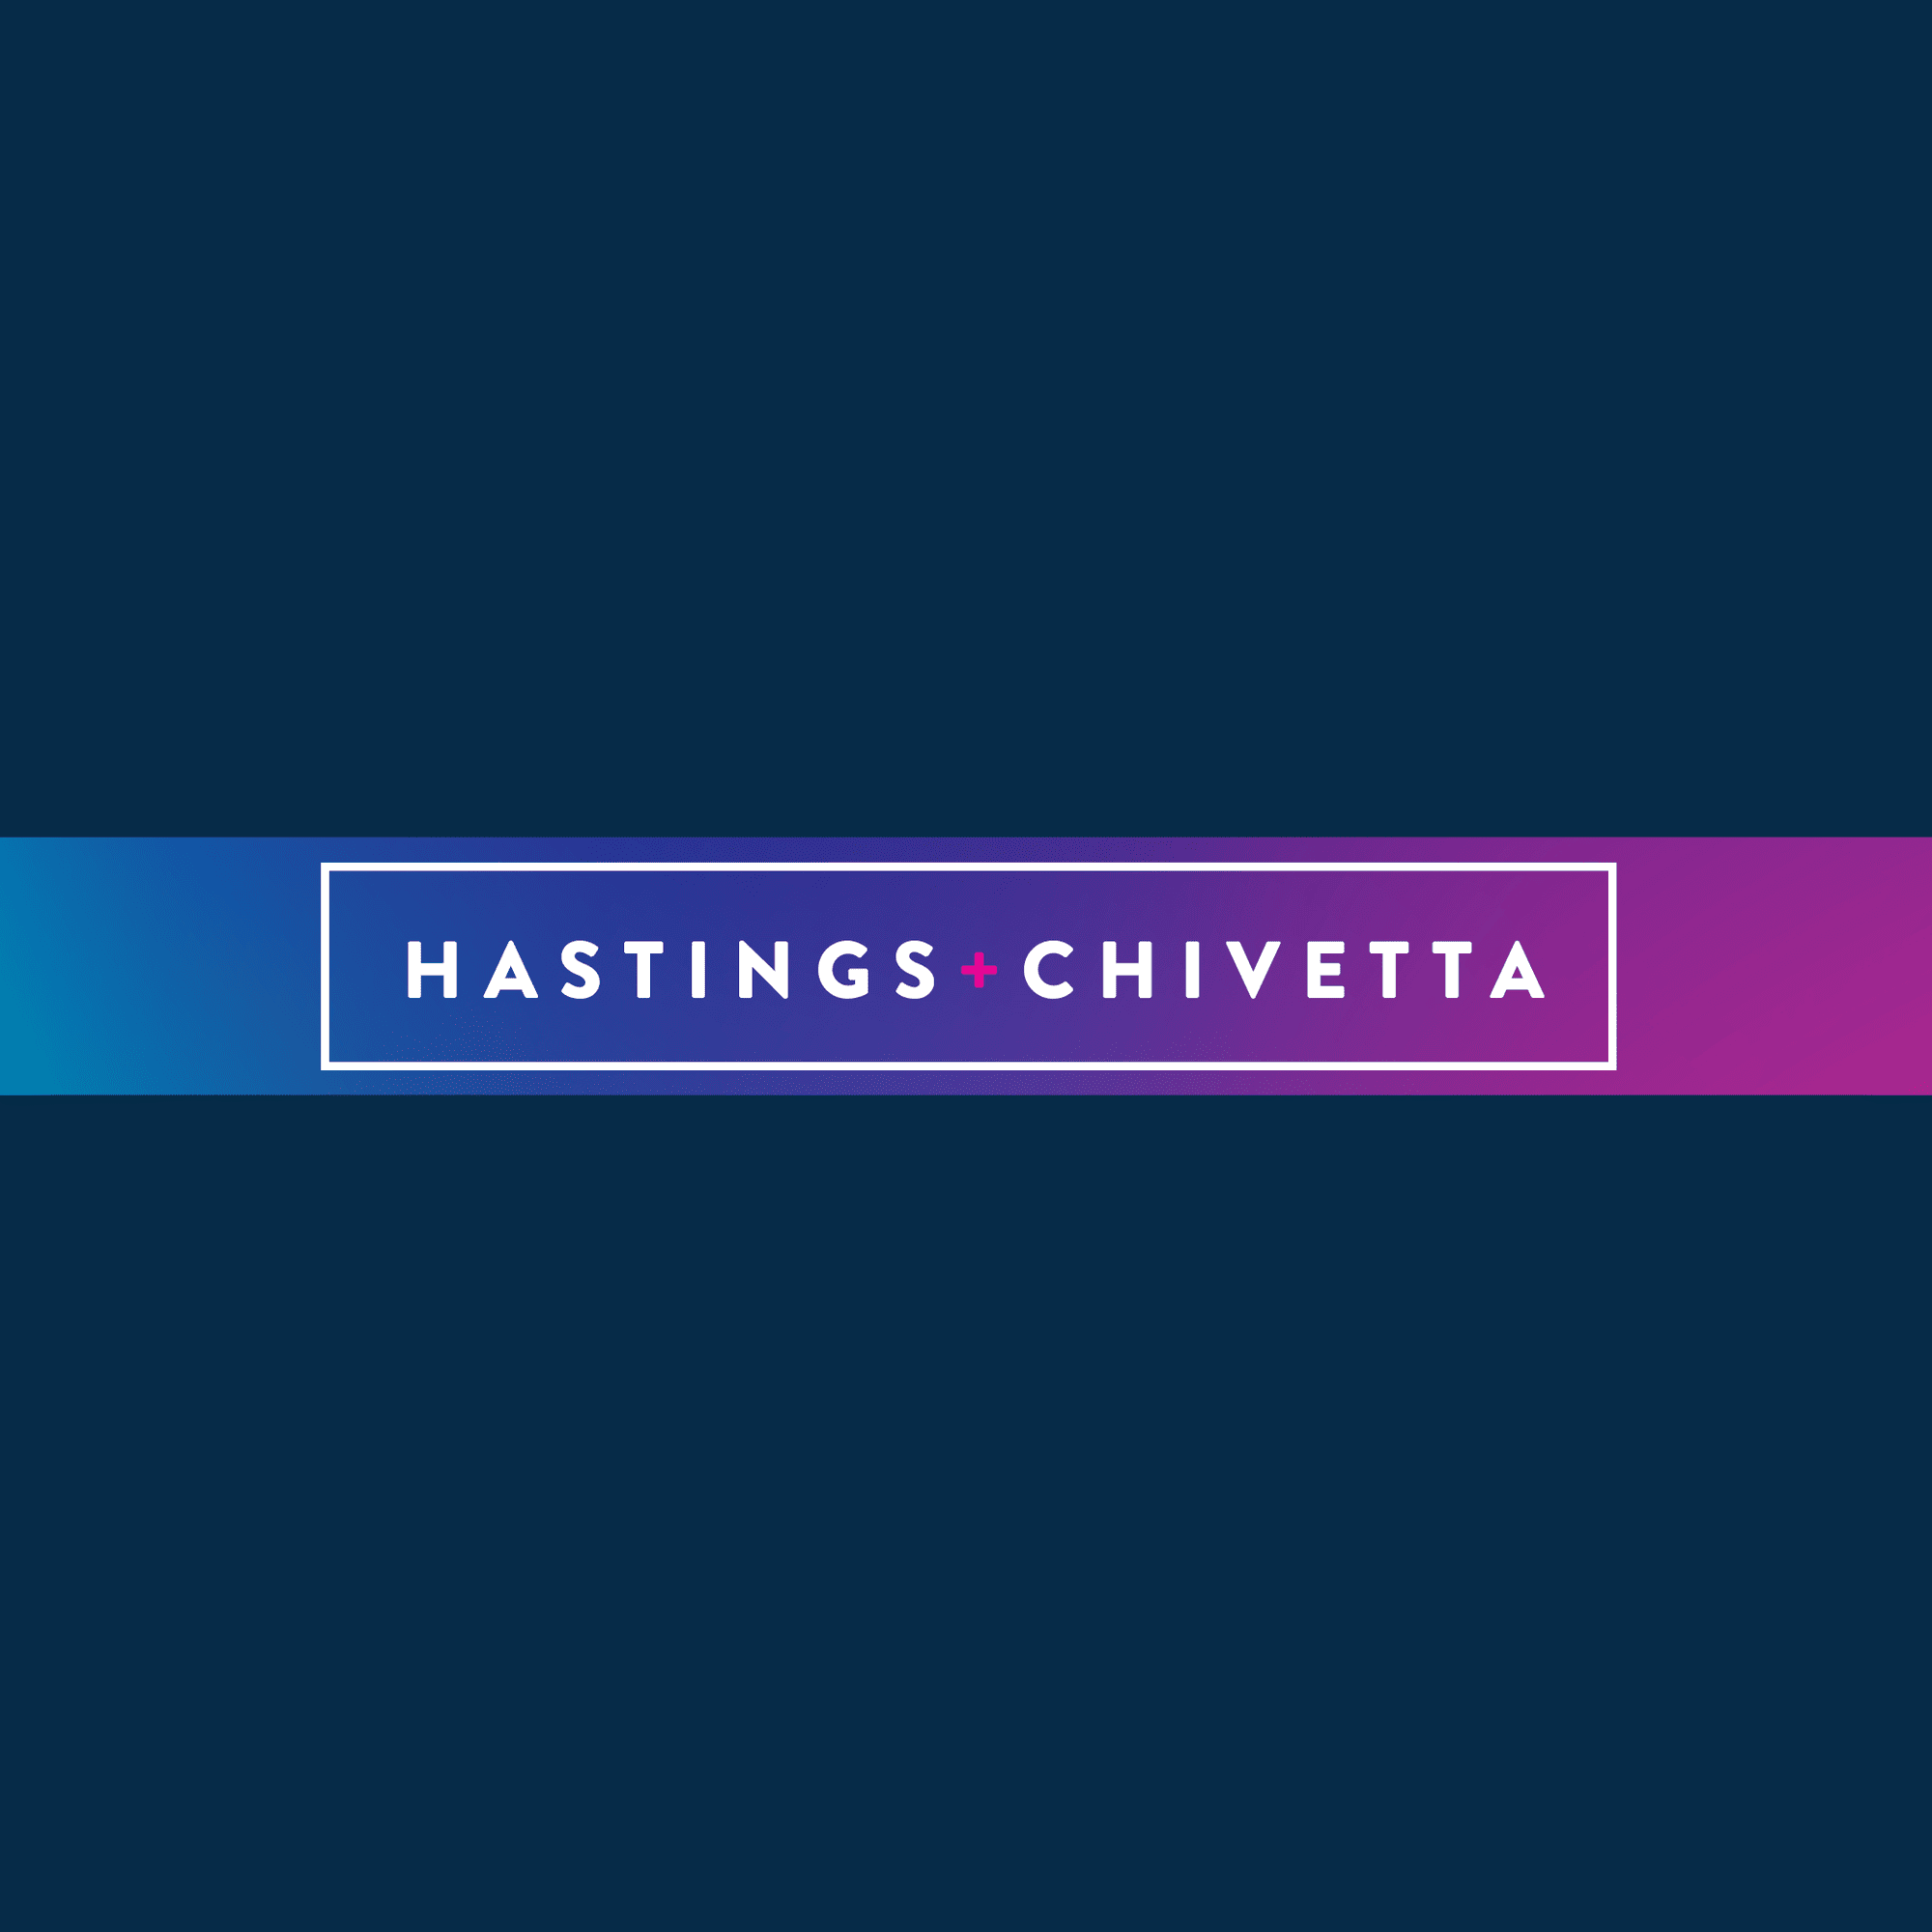 Hastings+Chivetta’s COVID-19 Response